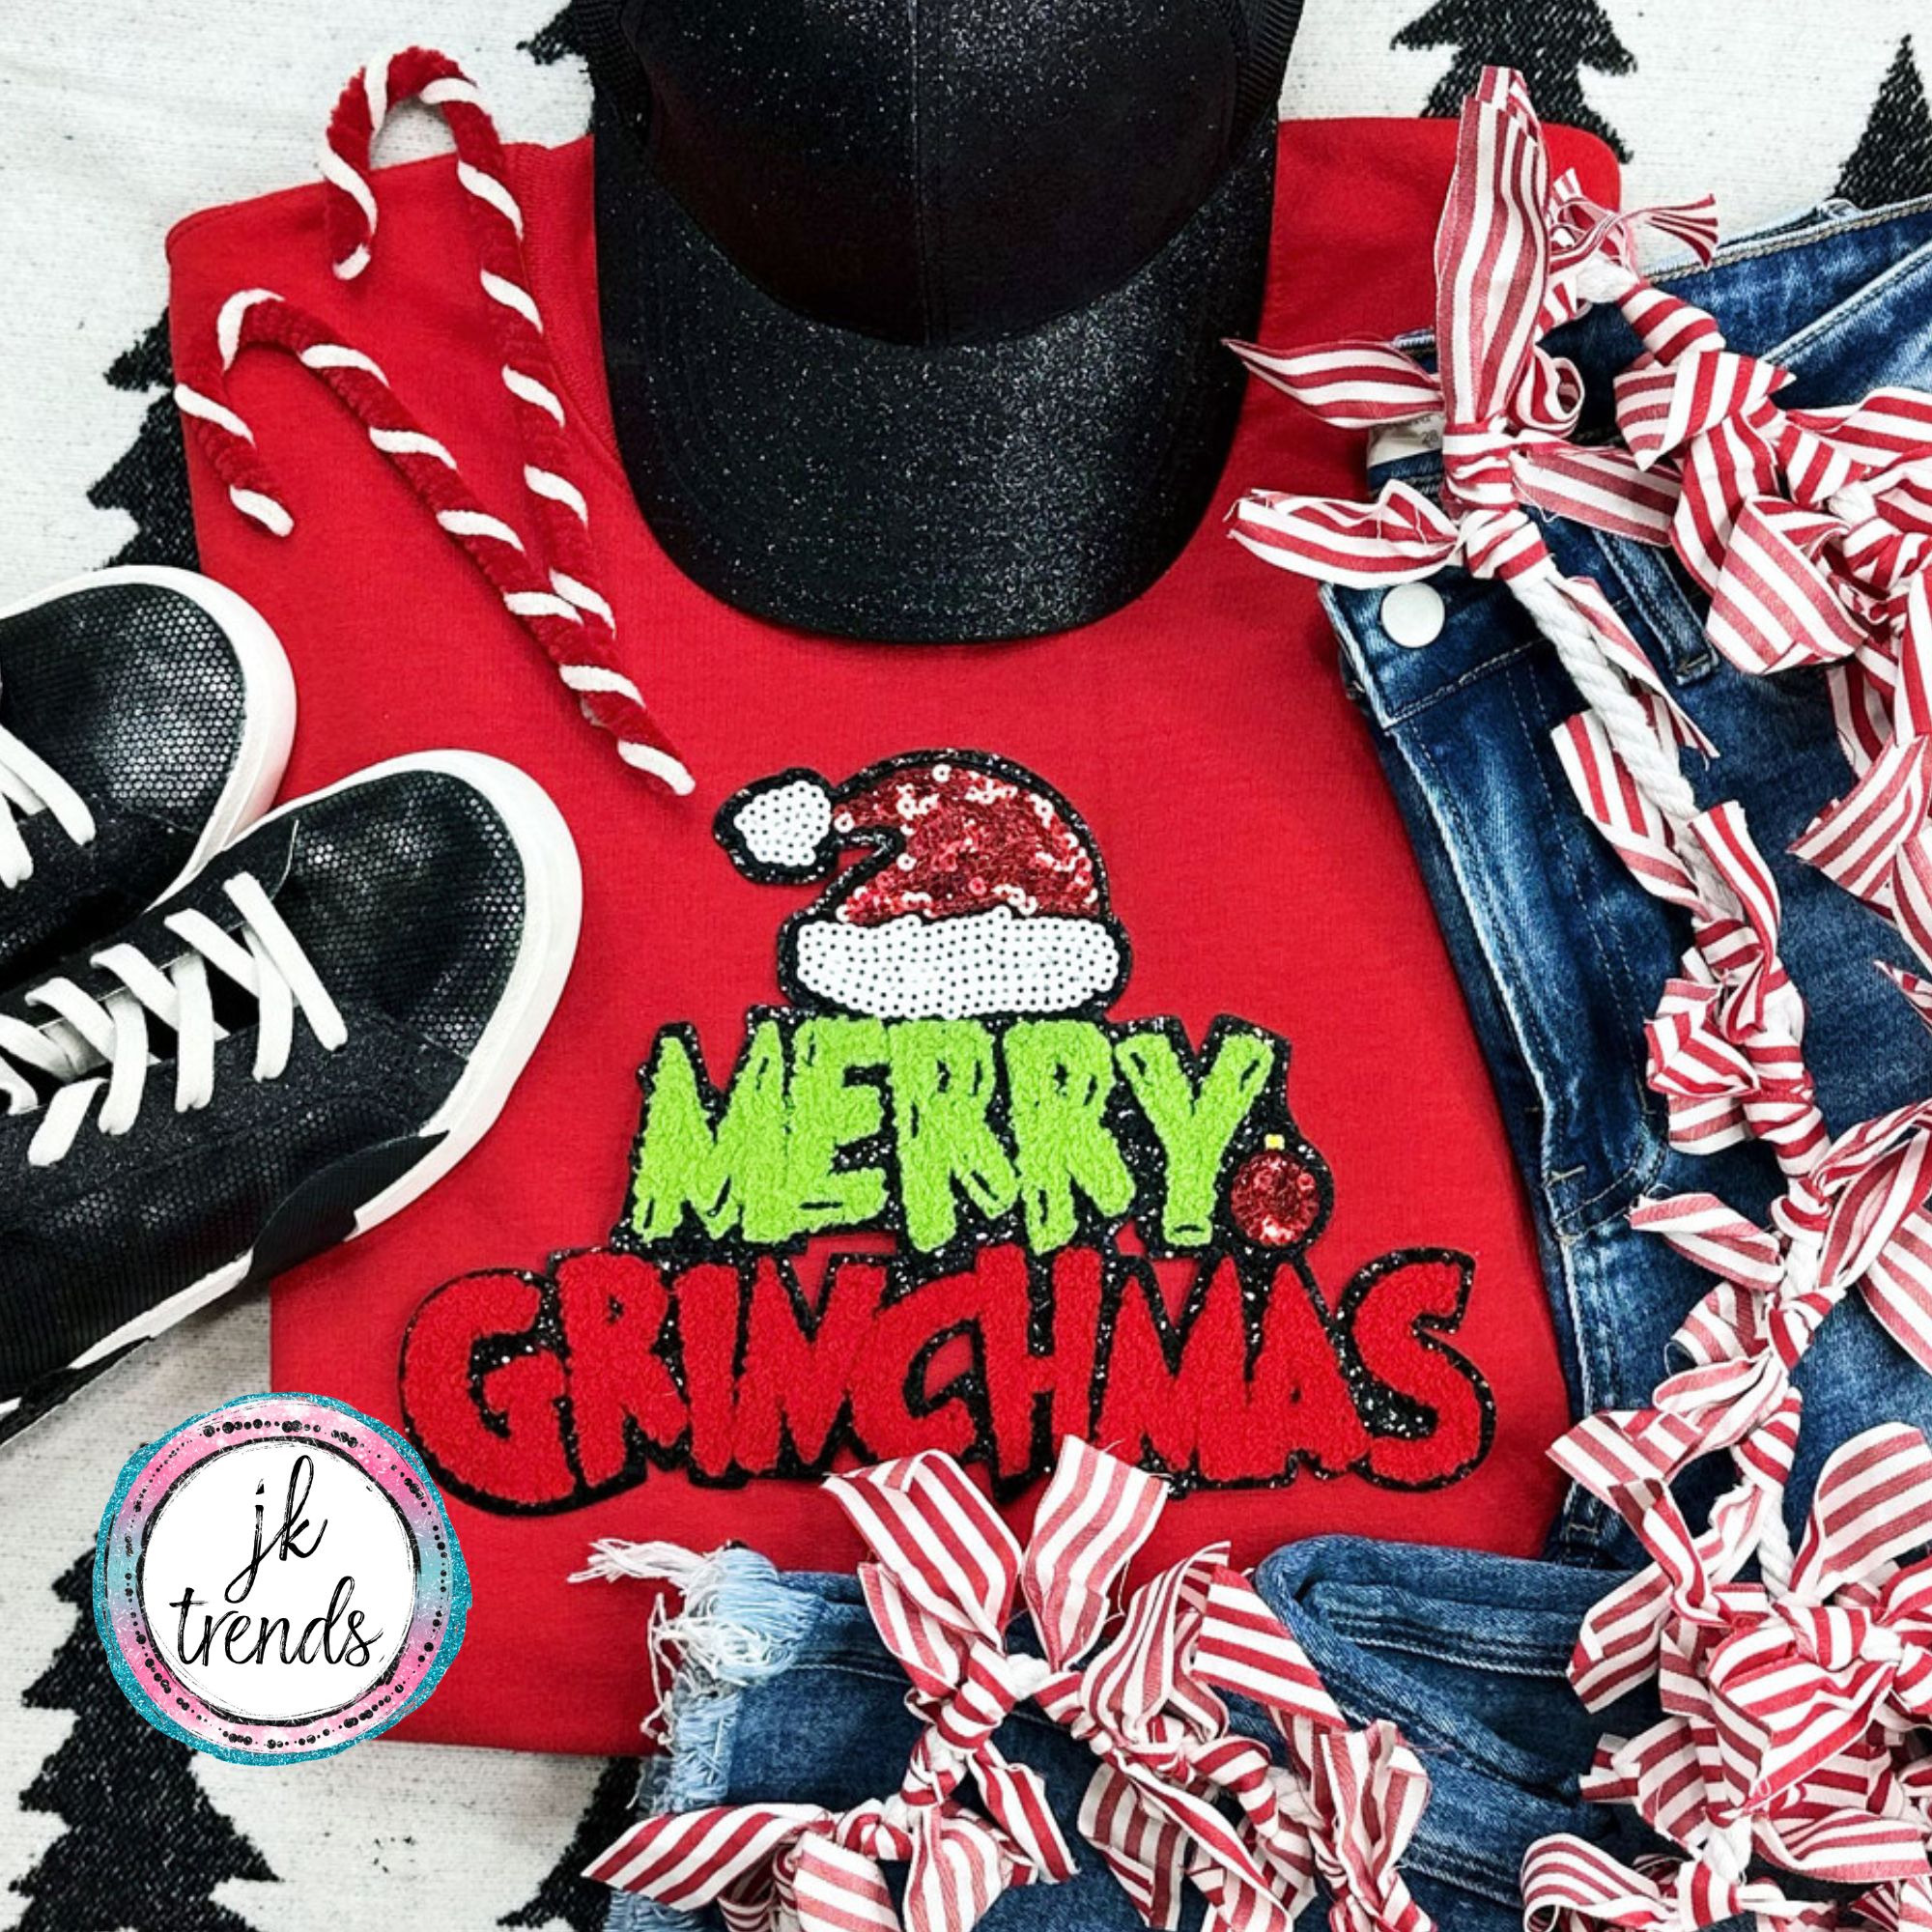 Merry Grinchmas Crewneck Sweatshirt